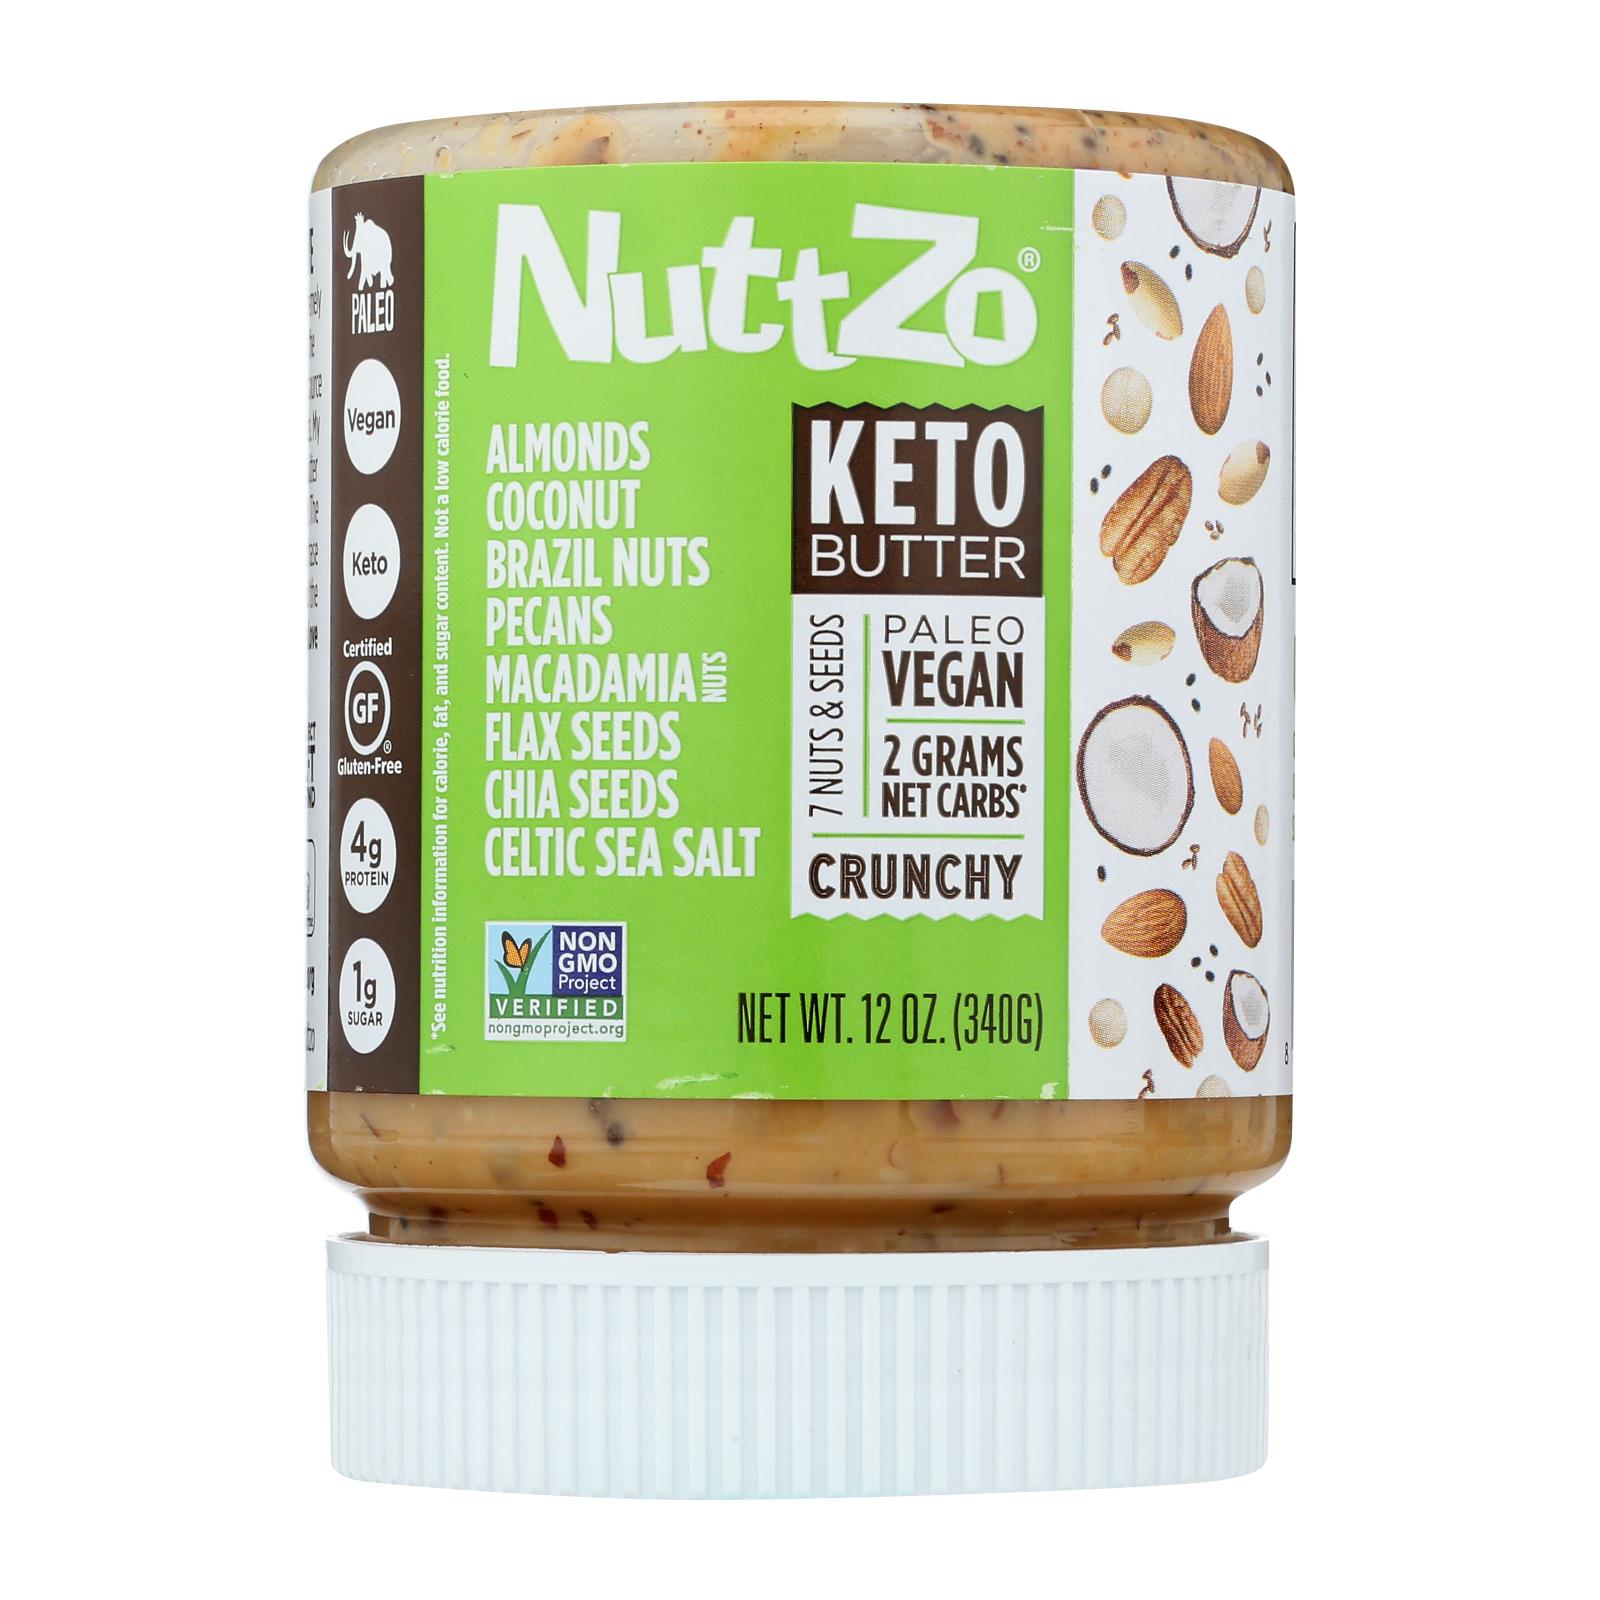 Nuttzo - Nut & Seed Butter Keto - 6개 묶음상품 - 12 OZ